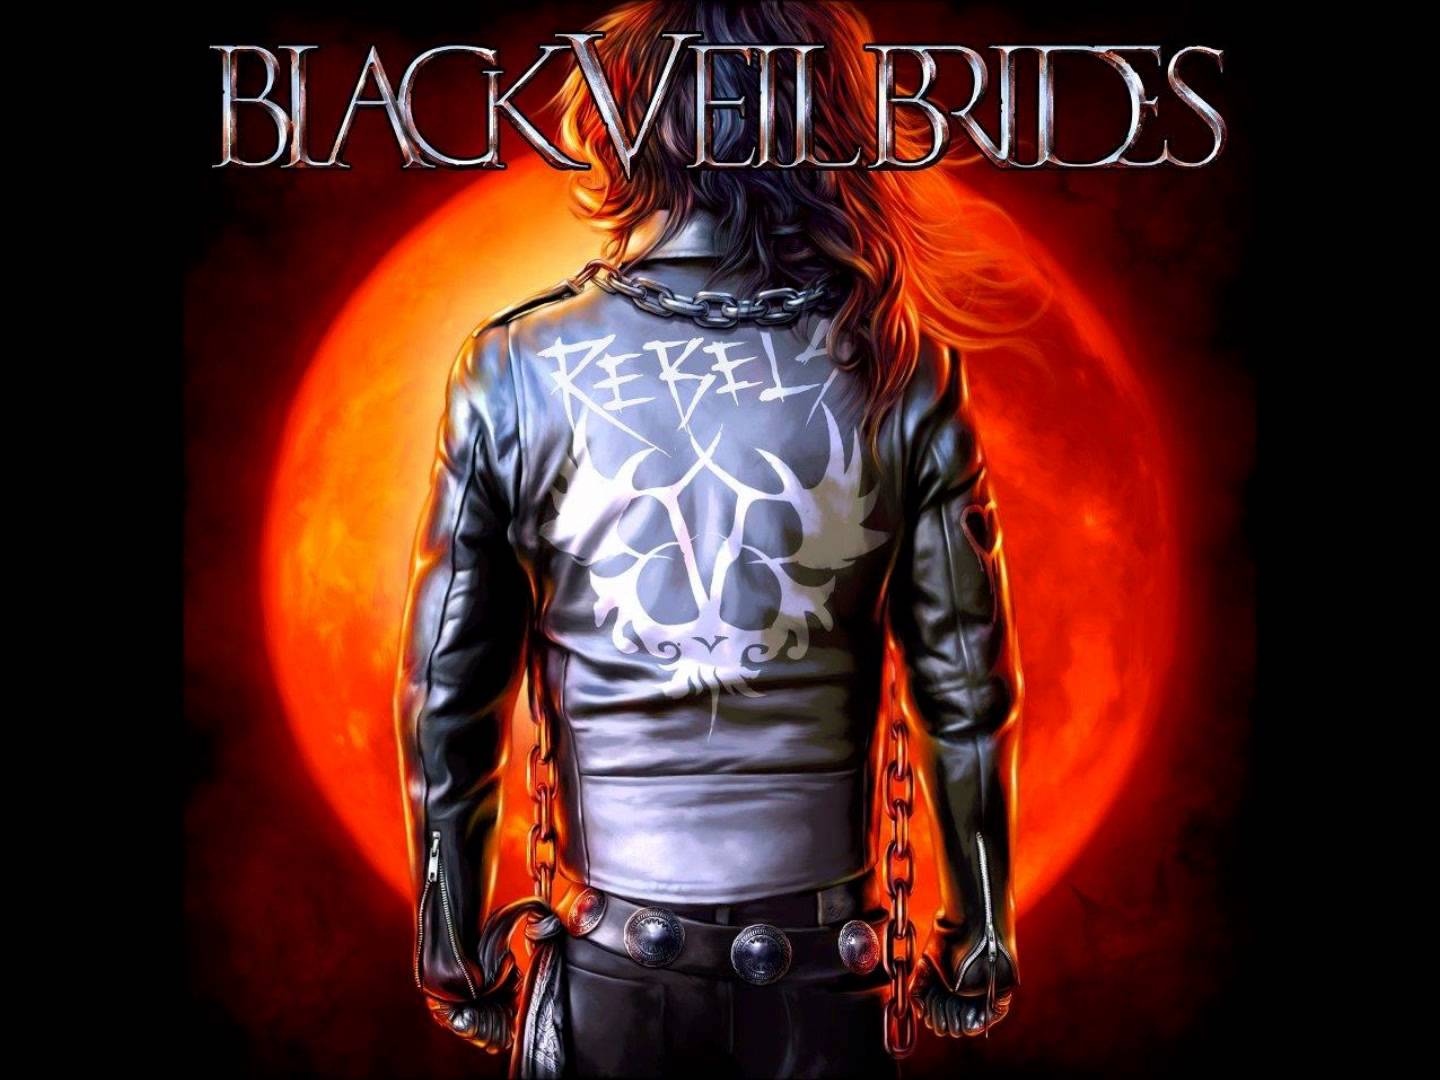 Black Veil Brides - Rebel Yell